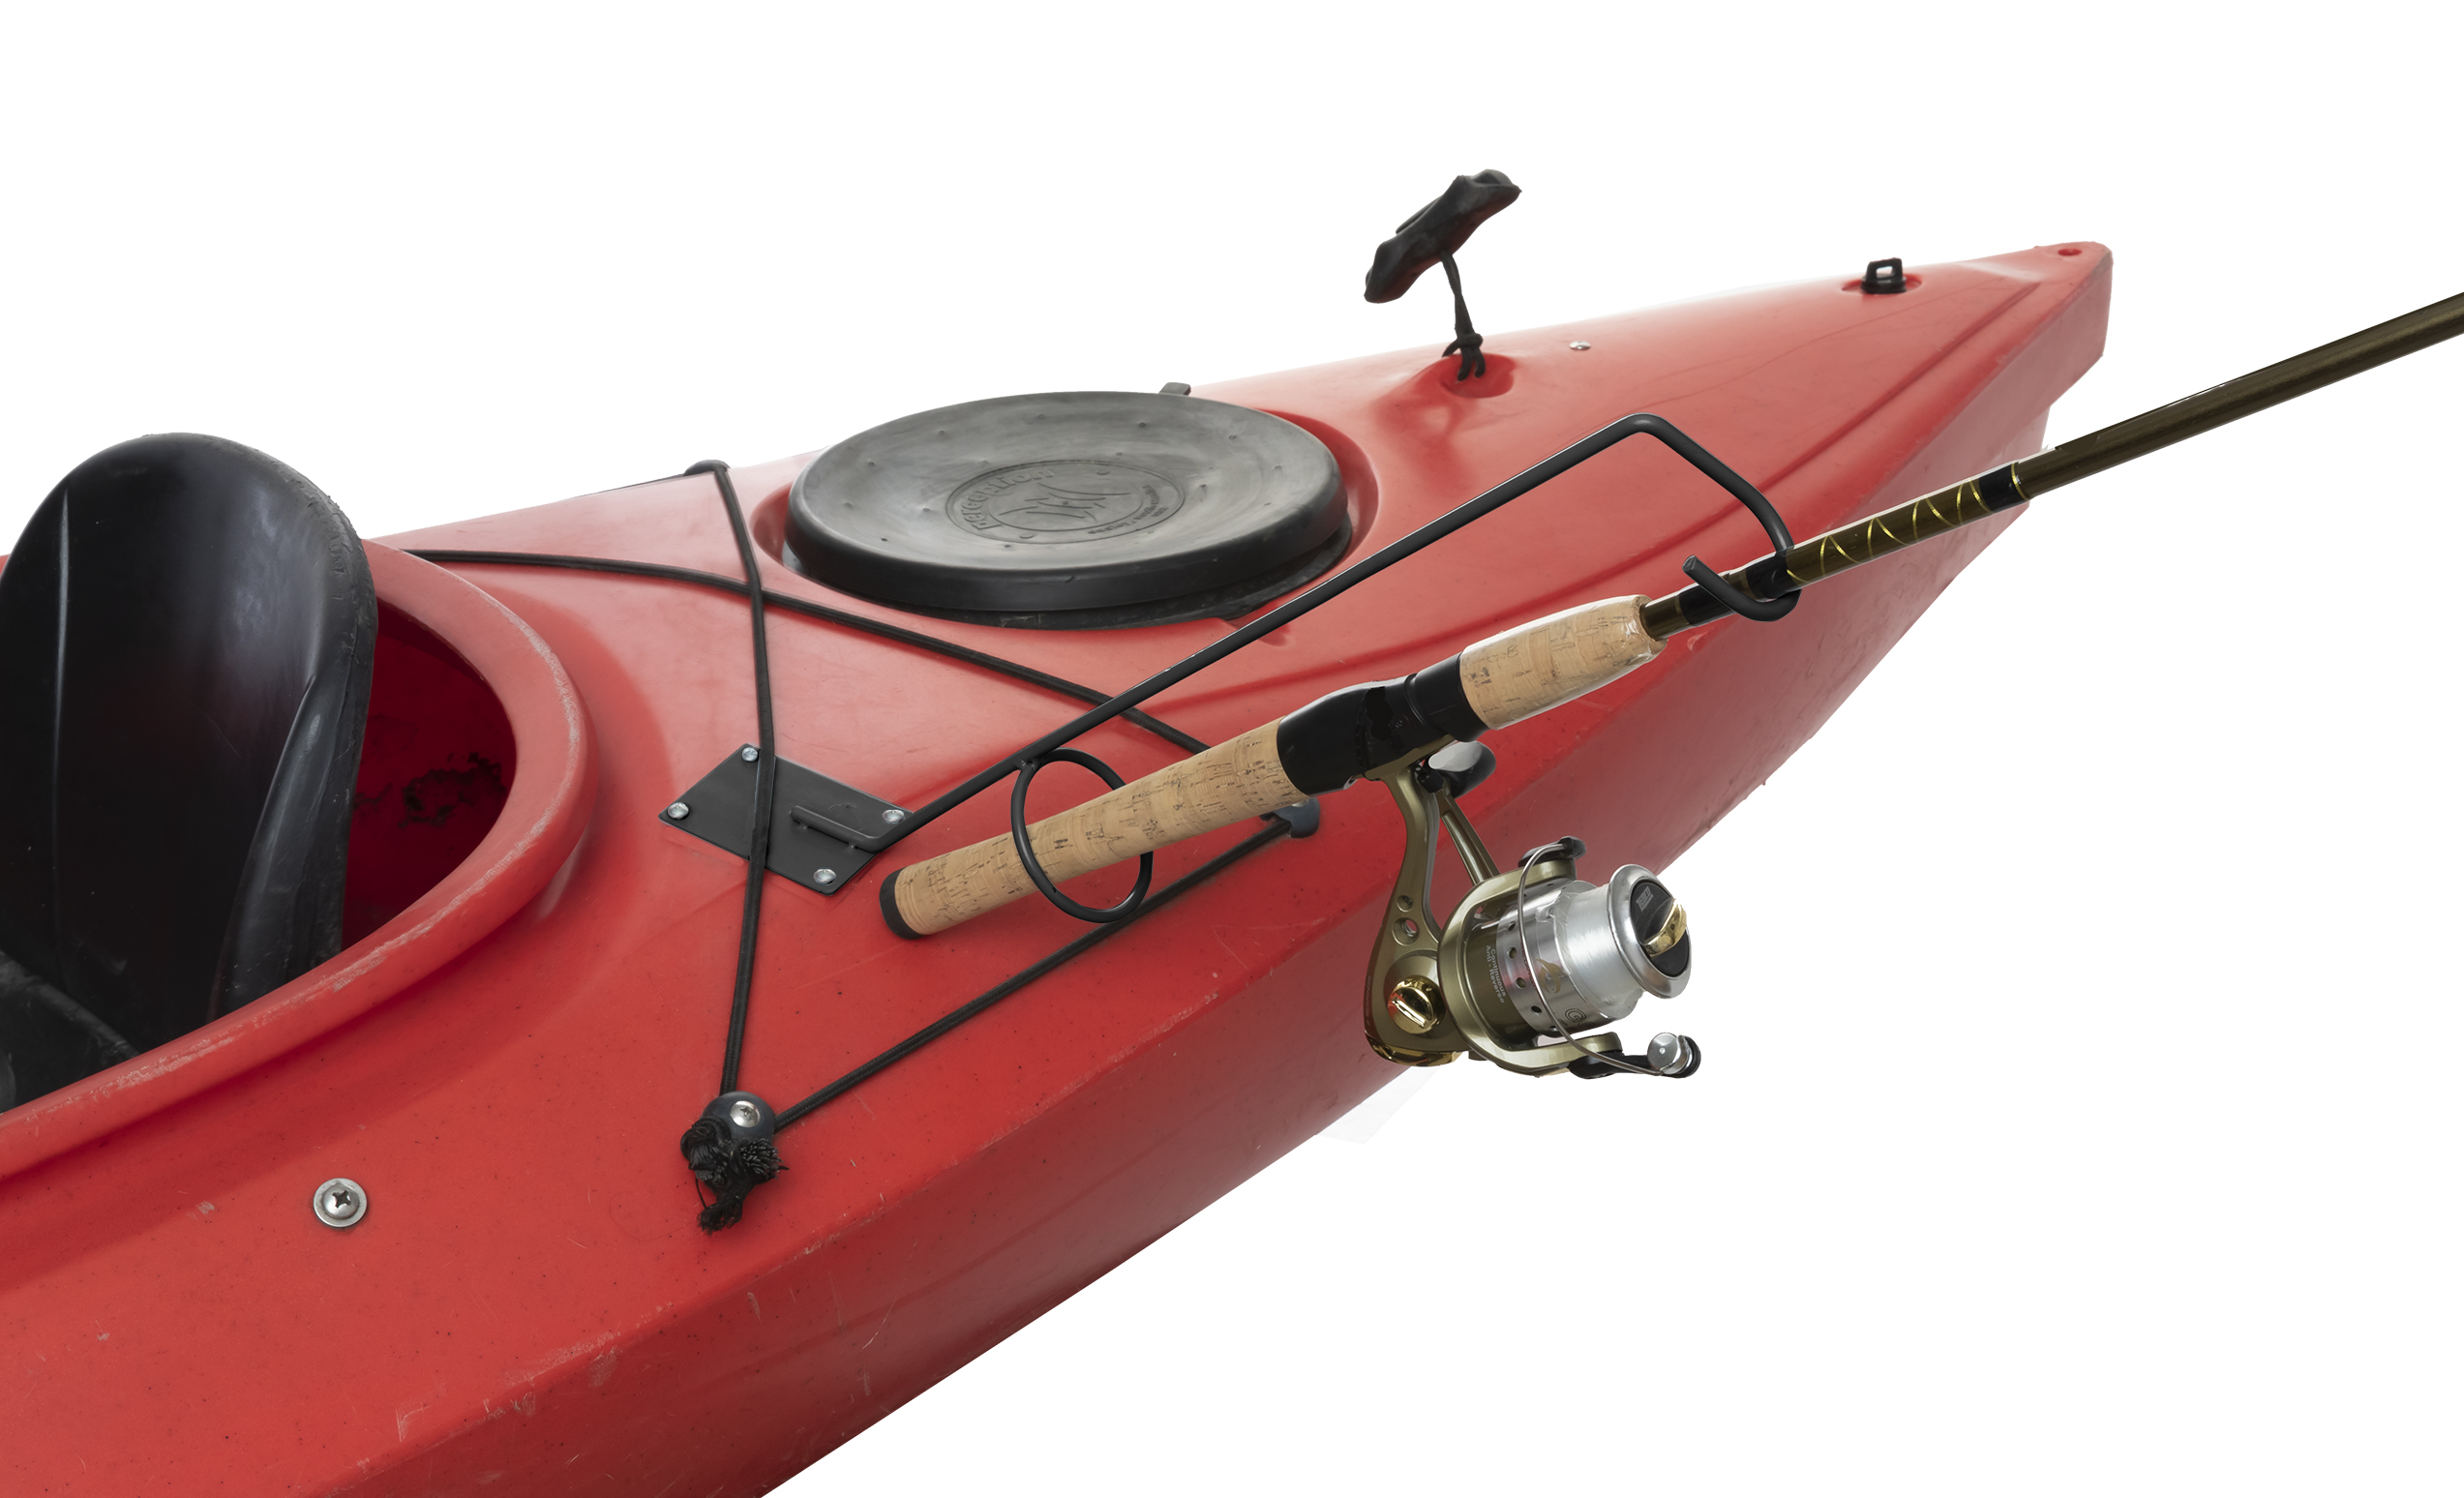 Ruk Sport Fishing Rod Holder - Essential Accessories for Fishing Kayak